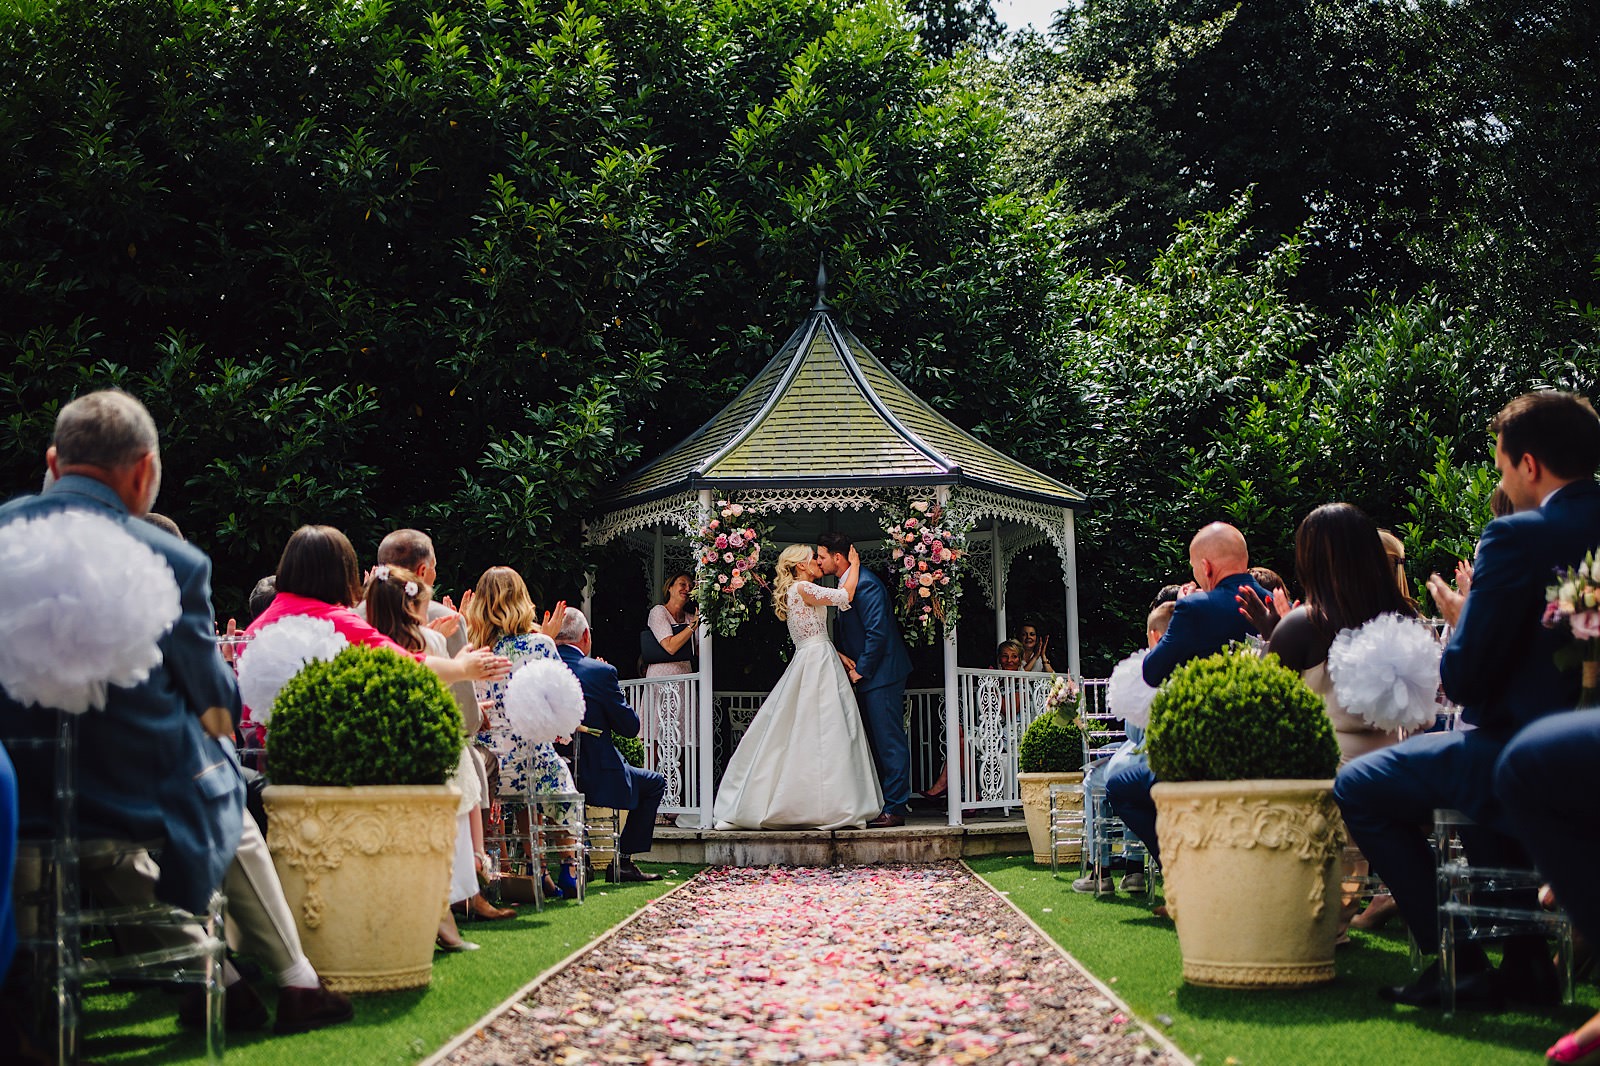 Pendrell Hall, outdoor wedding venue in Staffordshire